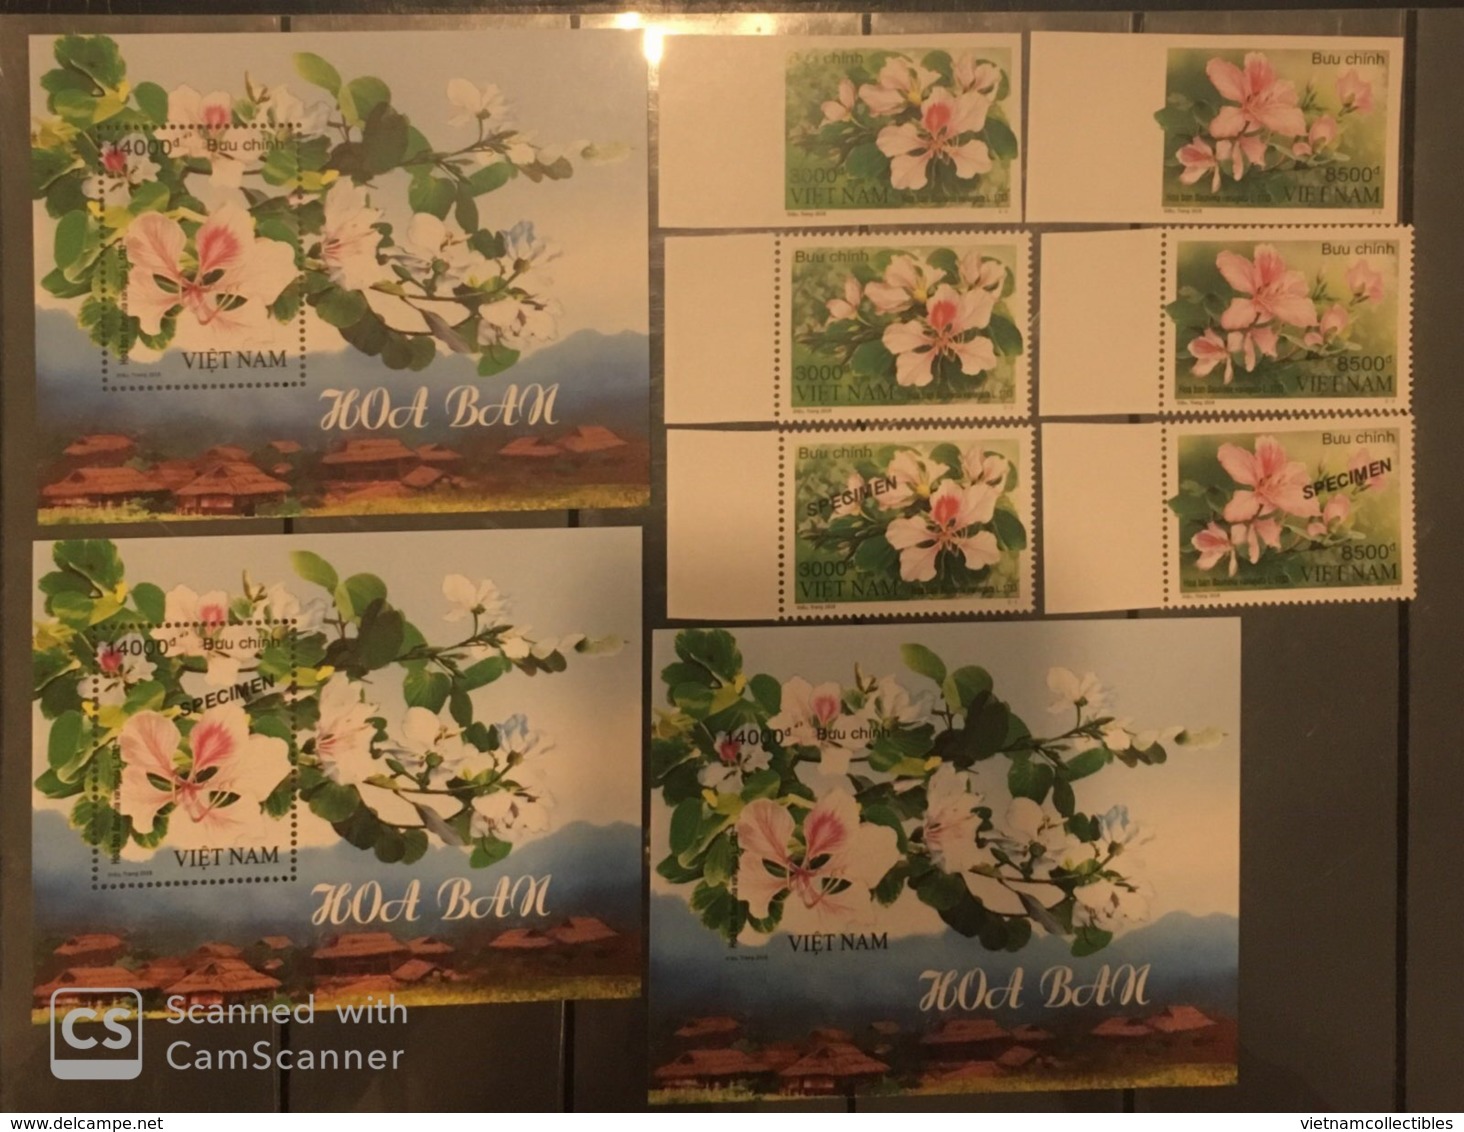 Collection Of Vietnam Viet Nam MNH Perf, Imperf, Specimen Issued On 1 Mar 2018 : Bauhinia Variefata Flower (Ms1090) - Vietnam